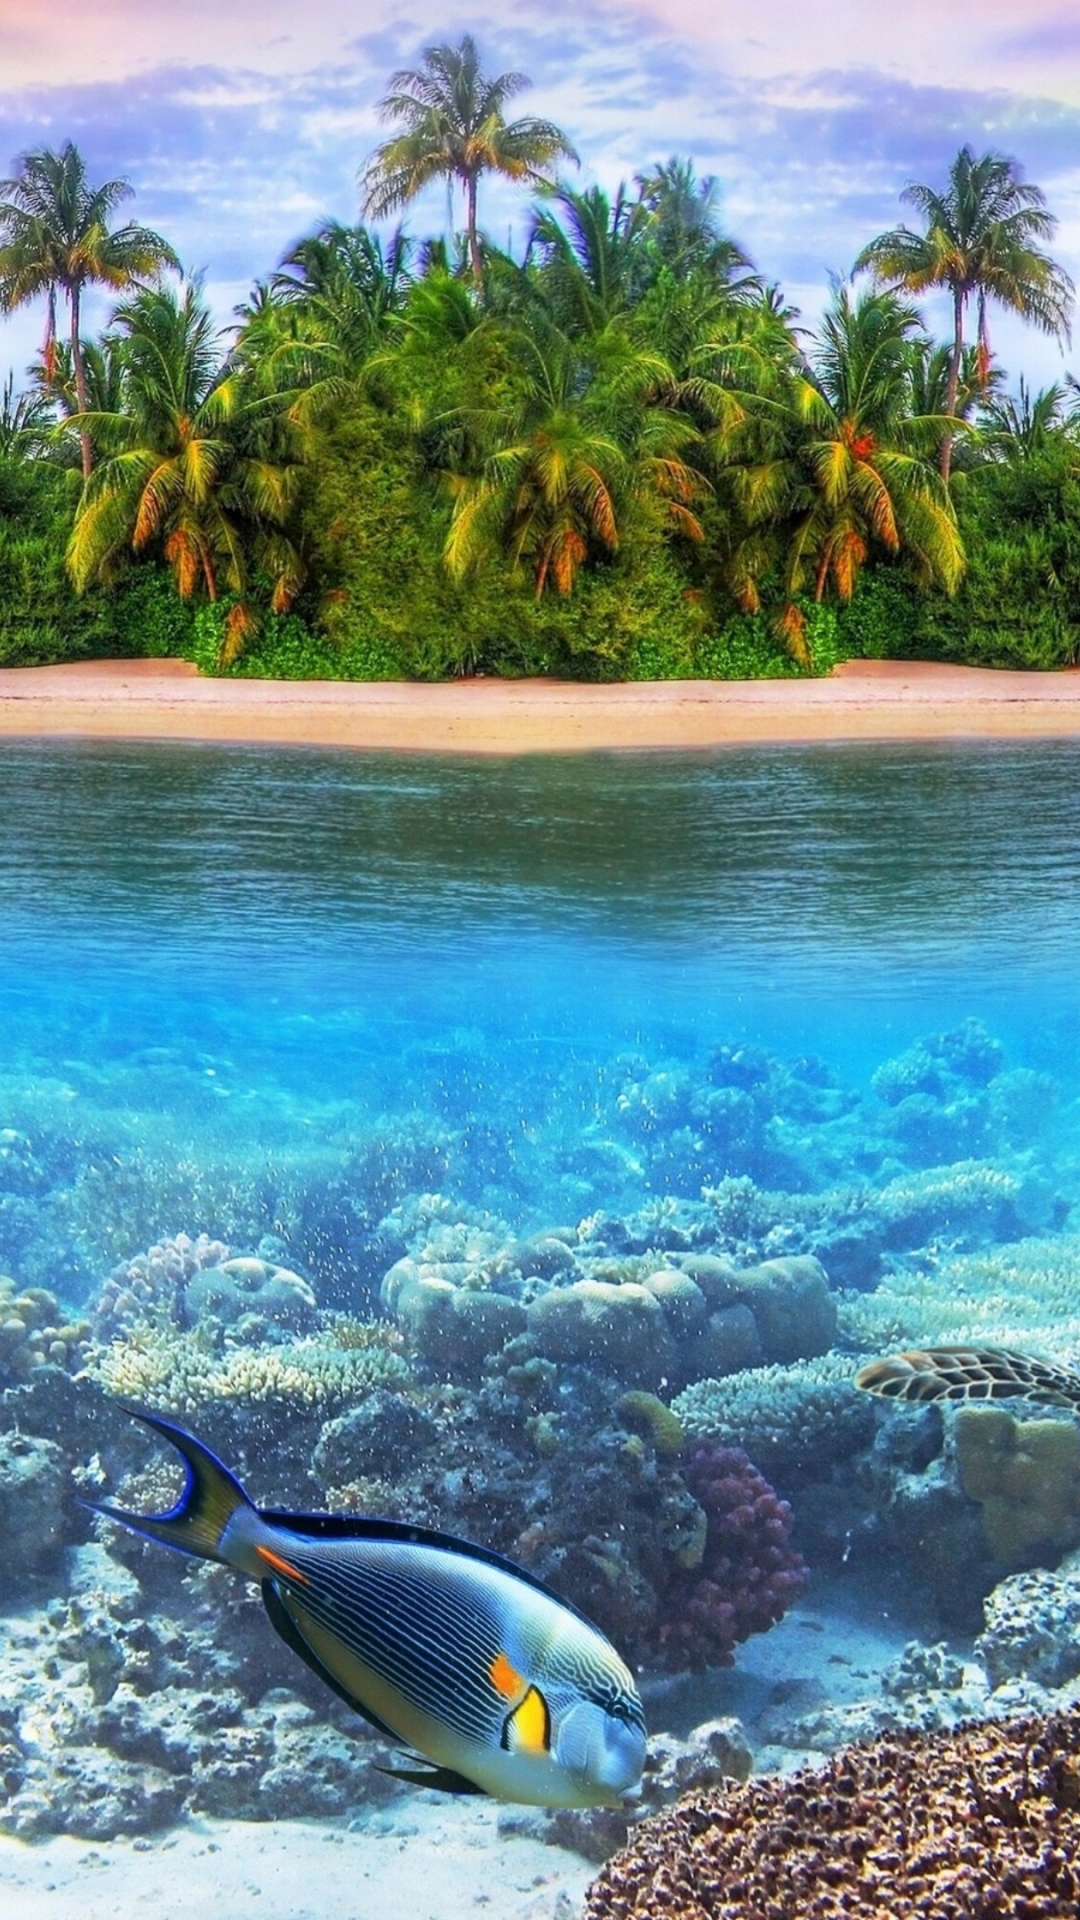 Descarga gratuita de fondo de pantalla para móvil de Isla, Submarino, Tortuga, Maldivas, Arrecife, Tierra/naturaleza, Pez.